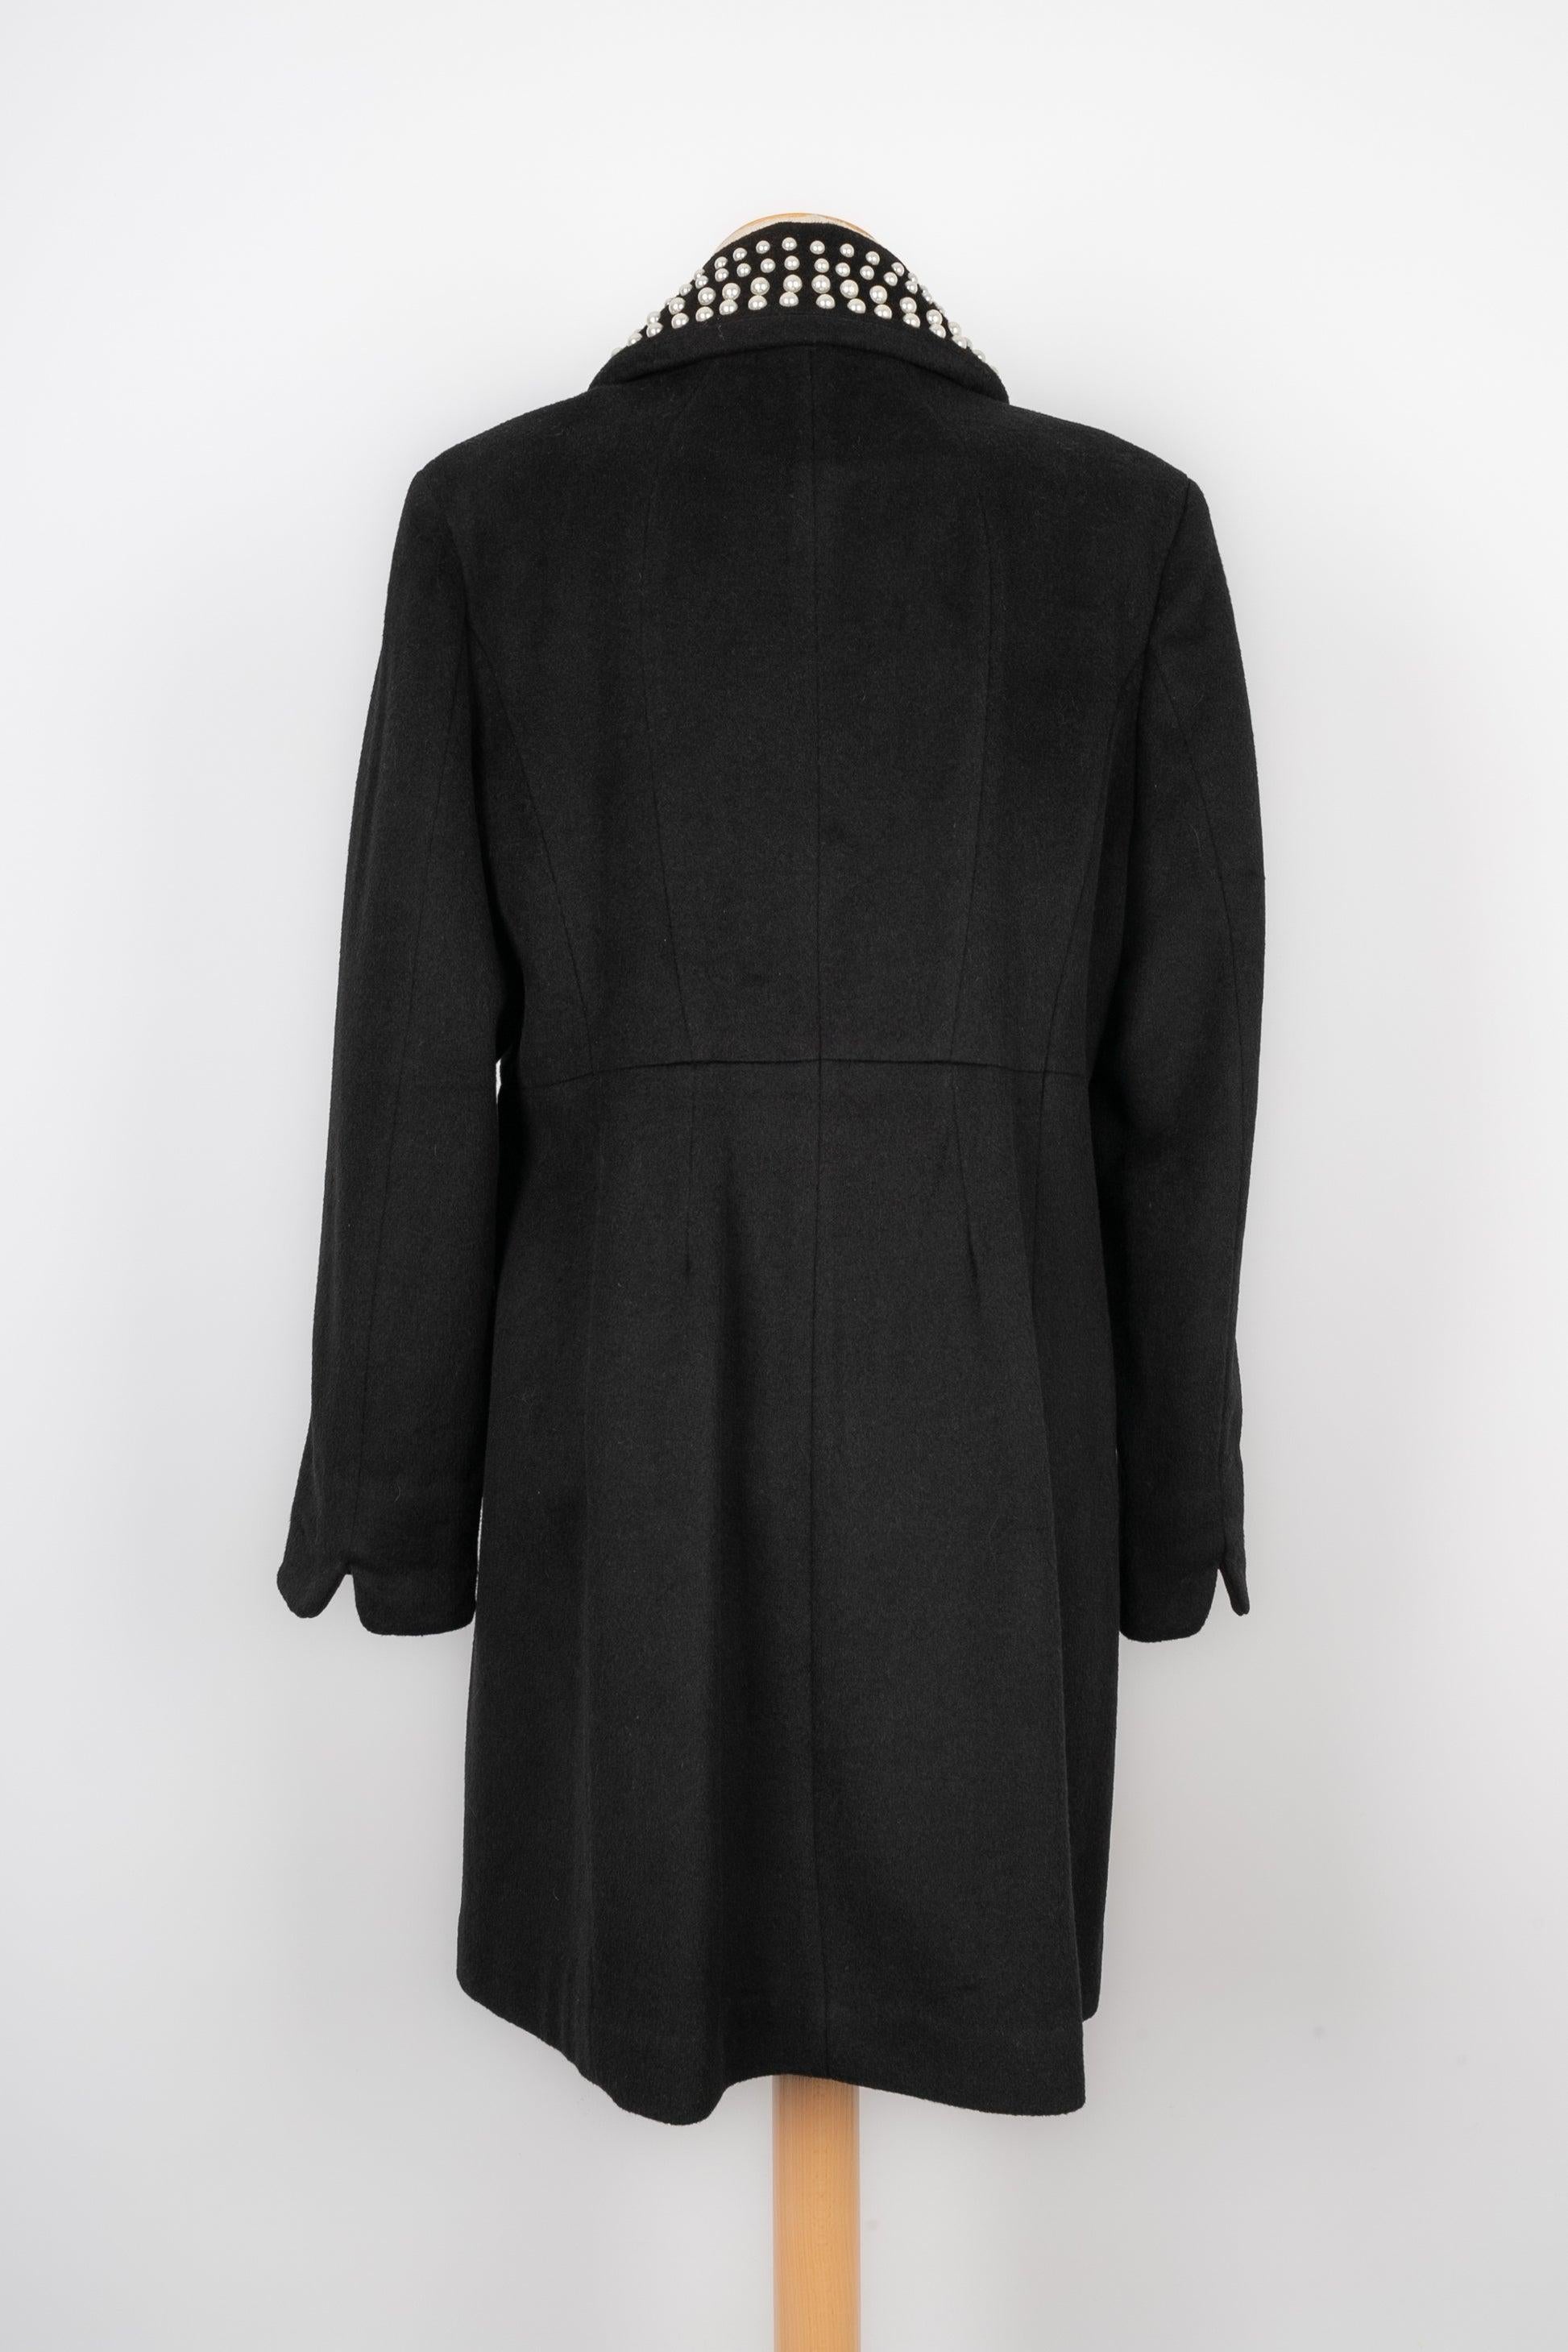 Karl Lagerfeld Black Blended Wool Jacket In Excellent Condition For Sale In SAINT-OUEN-SUR-SEINE, FR